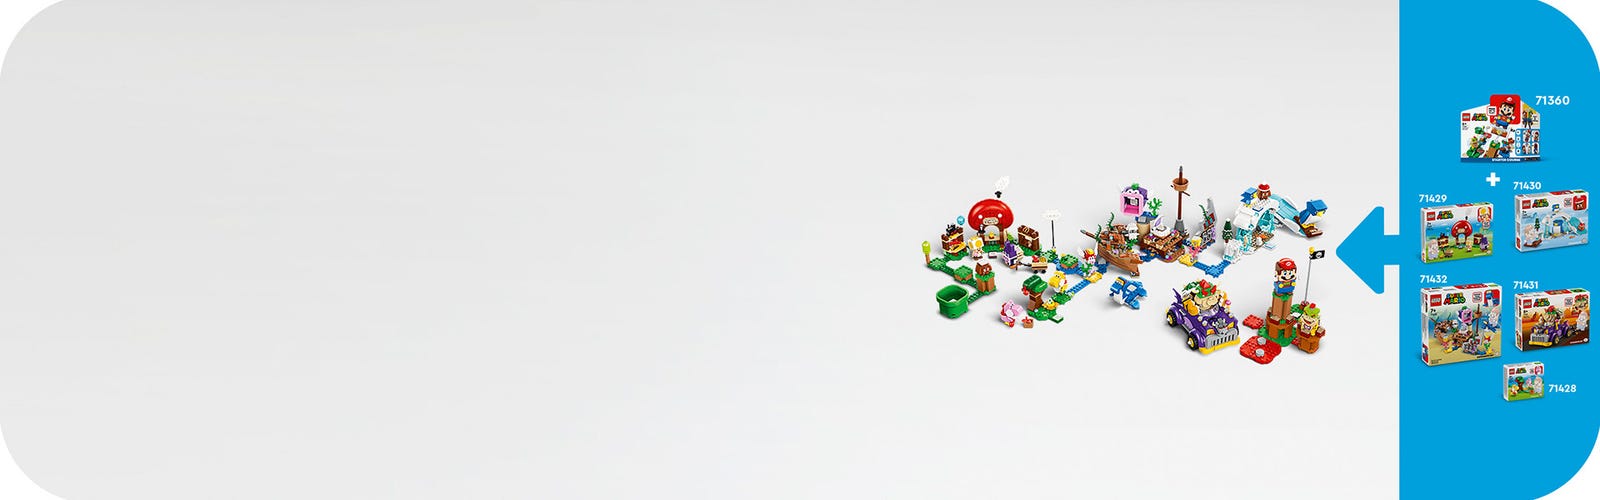 Bowser's Muscle Car Expansion Set 71431, LEGO® Super Mario™